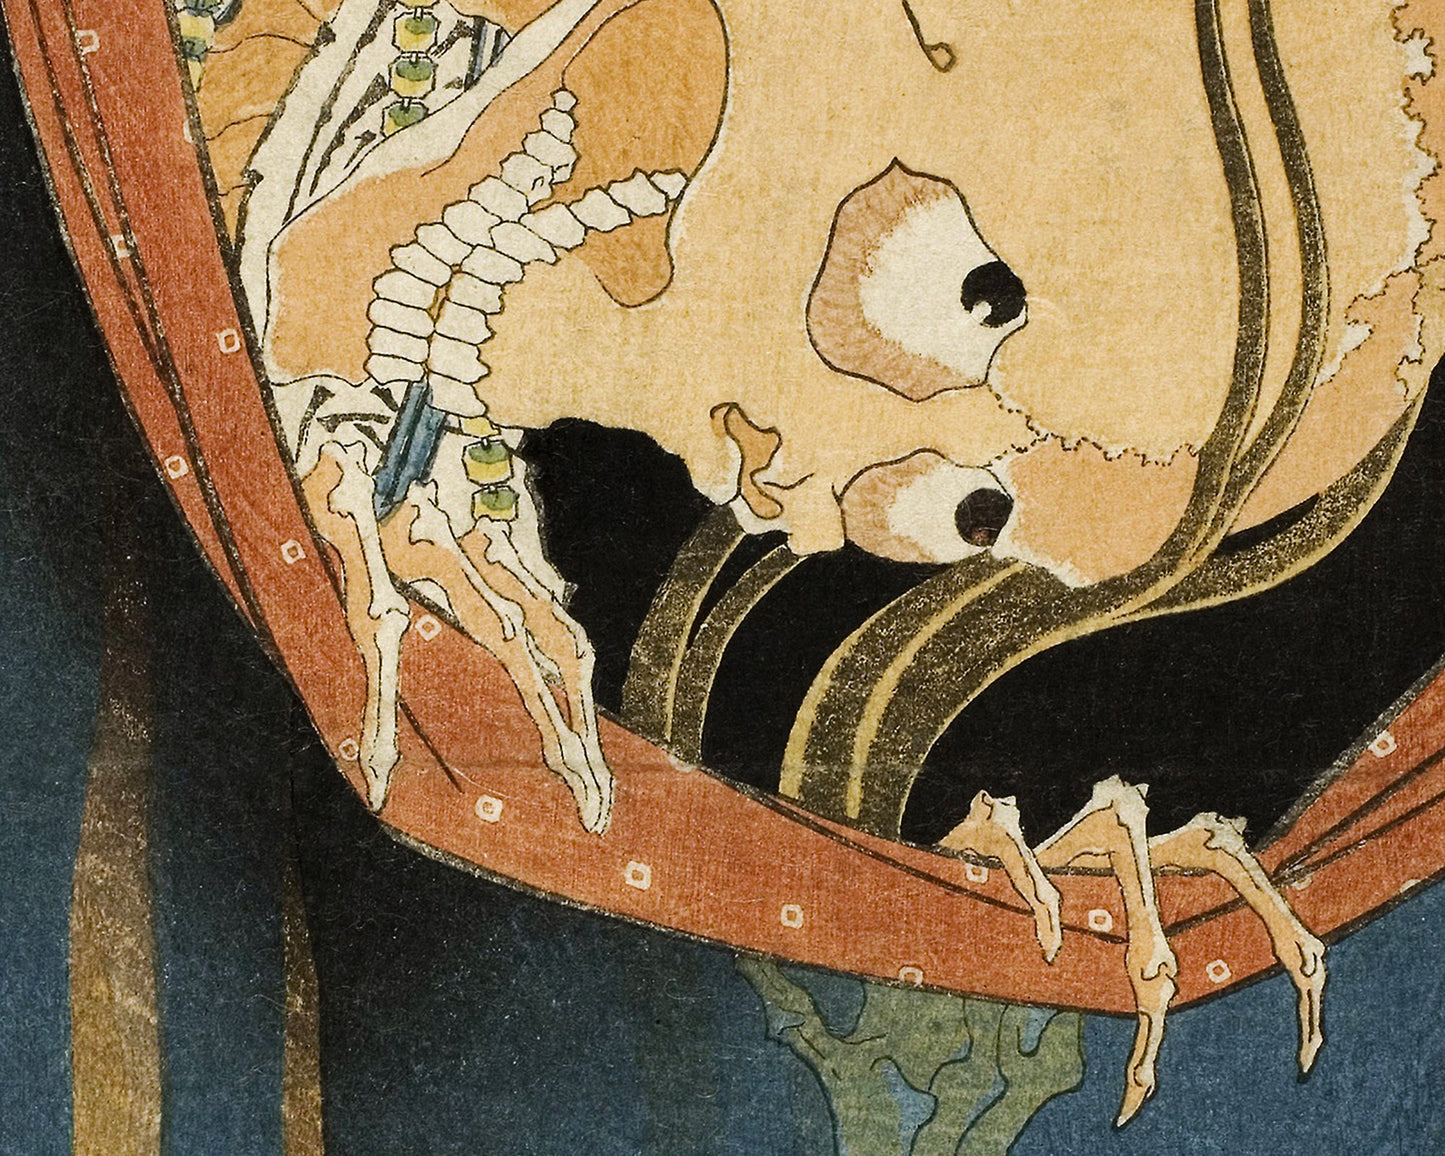 Vintage Japanese ghost tale | Skeleton wall decor | Antique color woodcut print | Giclée fine art print | Eco-friendly gift